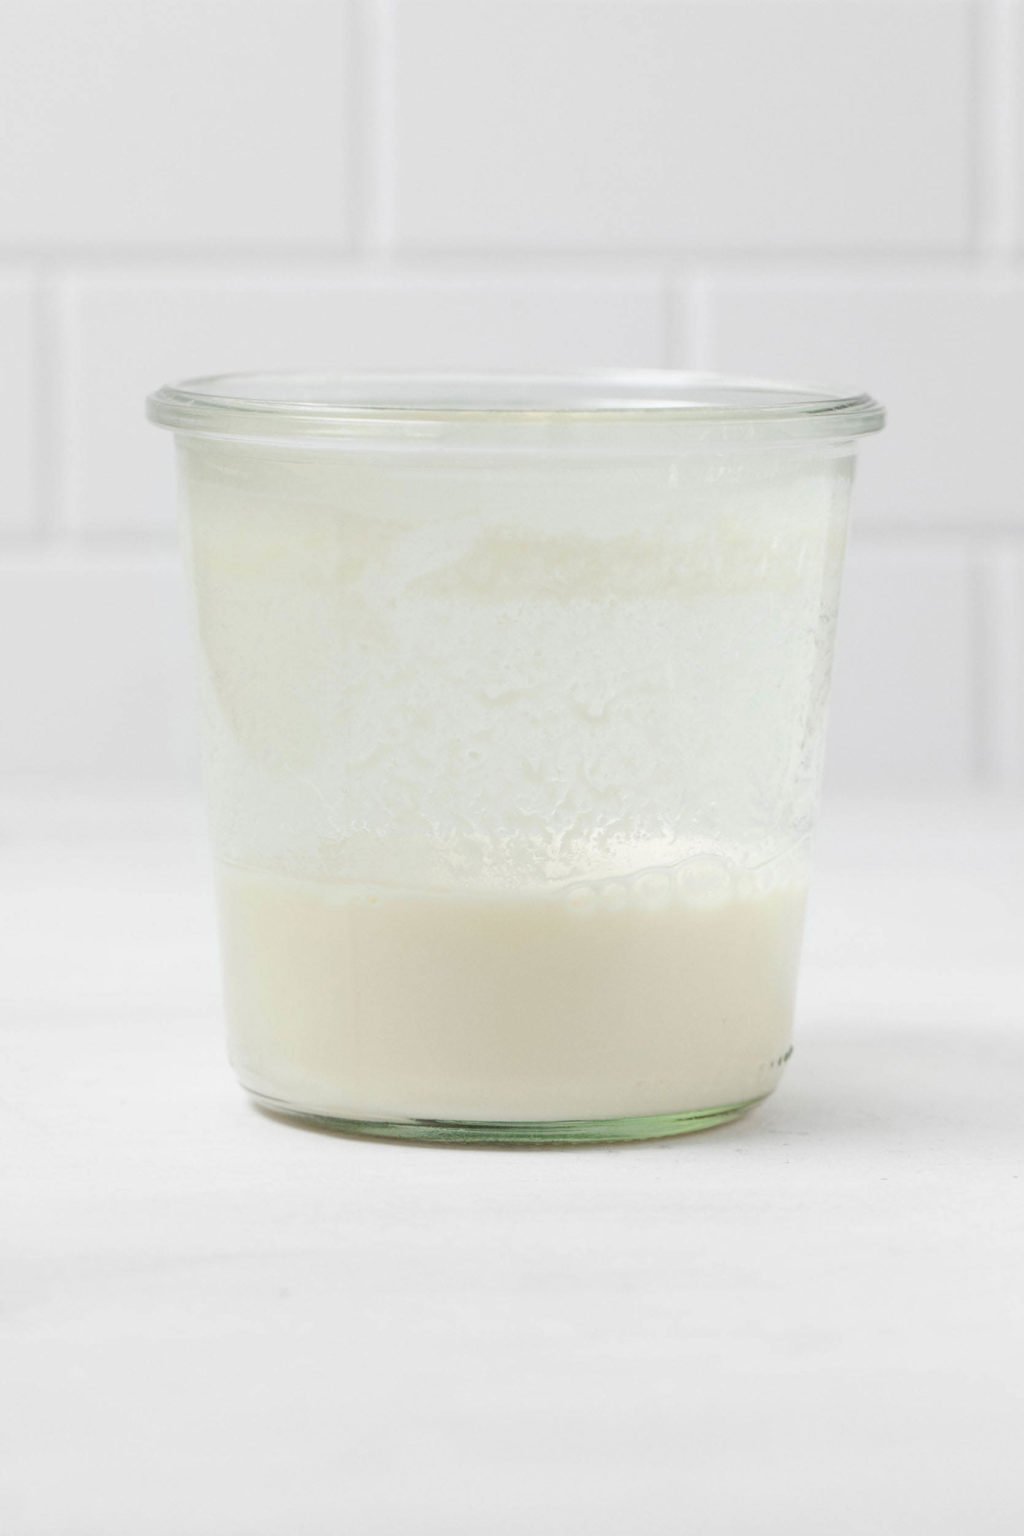 Un bote de cristal de leche de mantequilla vegana casera descansa sobre una superficie blanca.